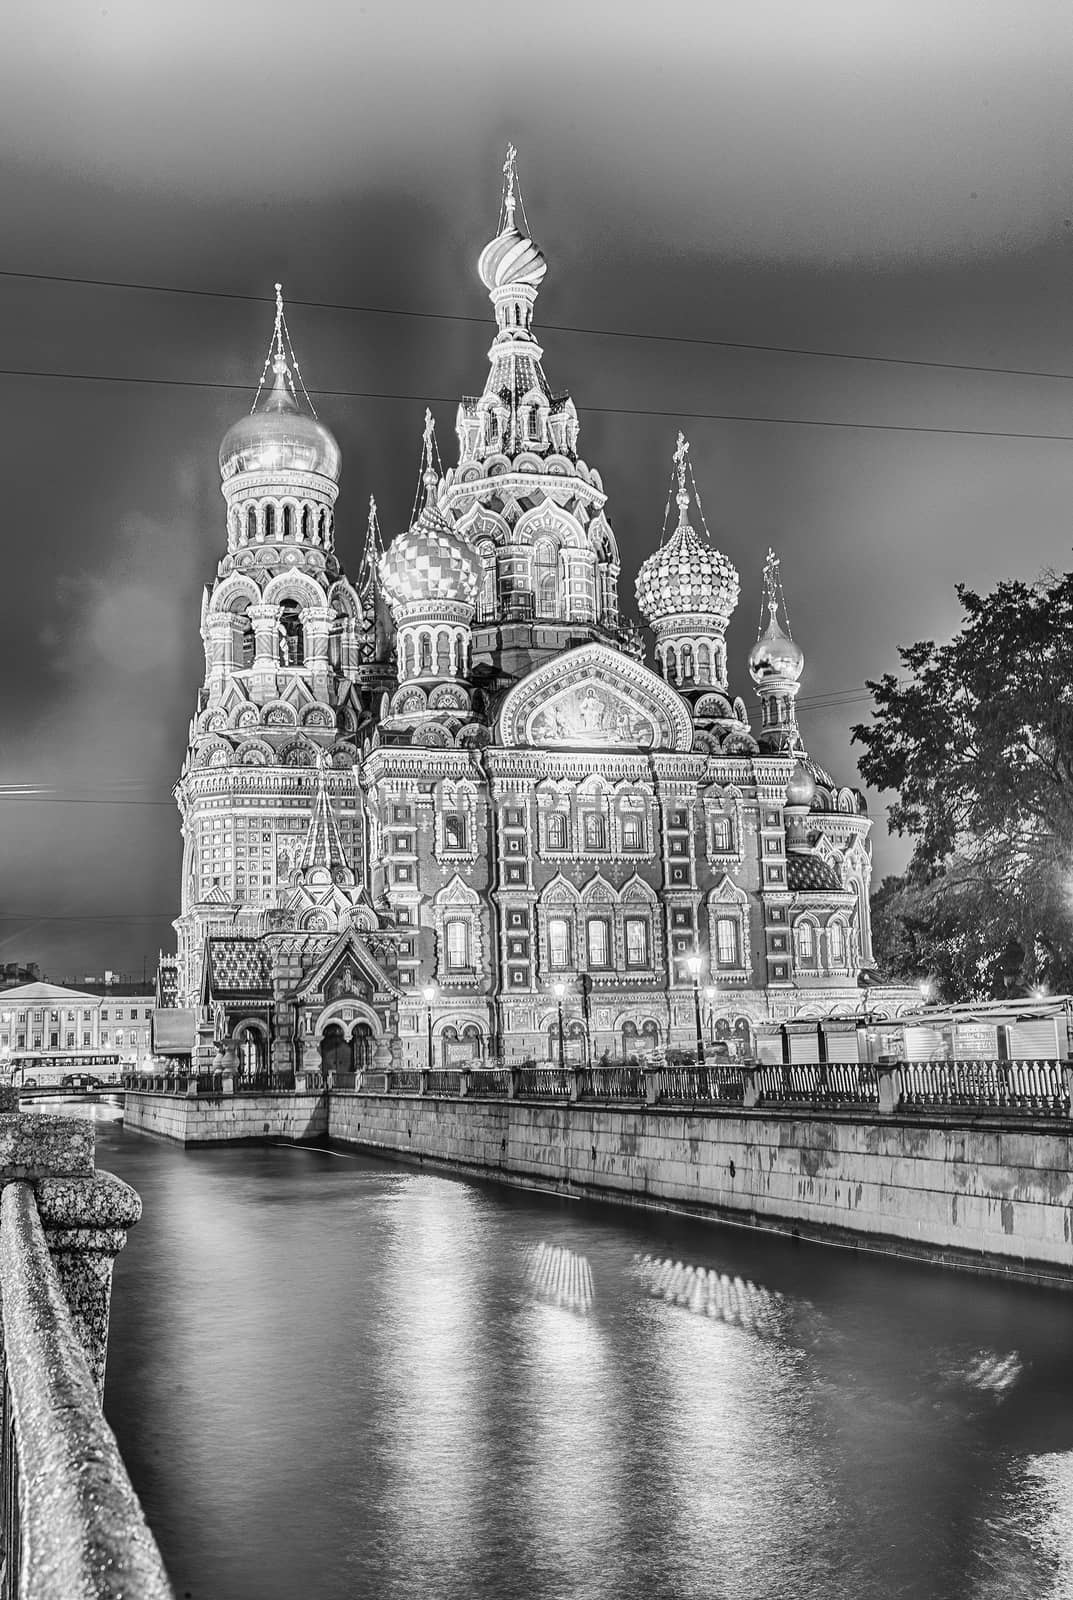 Church of the Savior on Blood at night, St. Petersburg by marcorubino